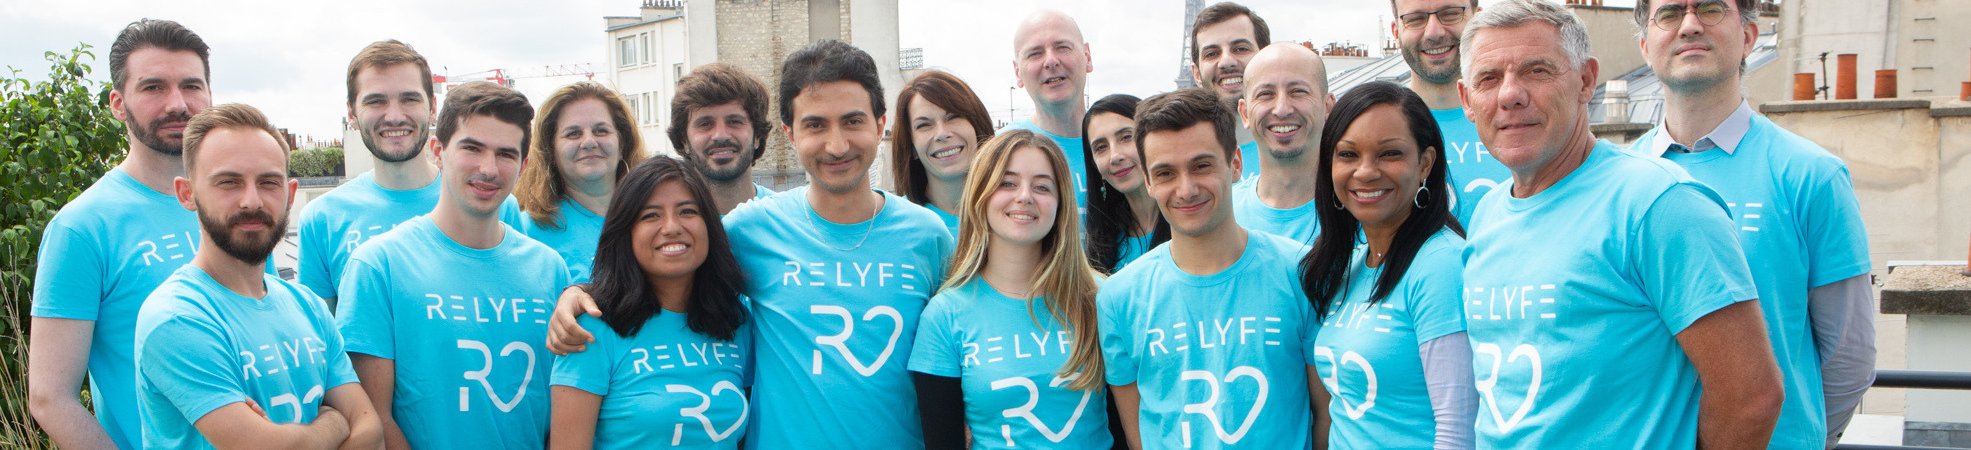 ReLyfe Group